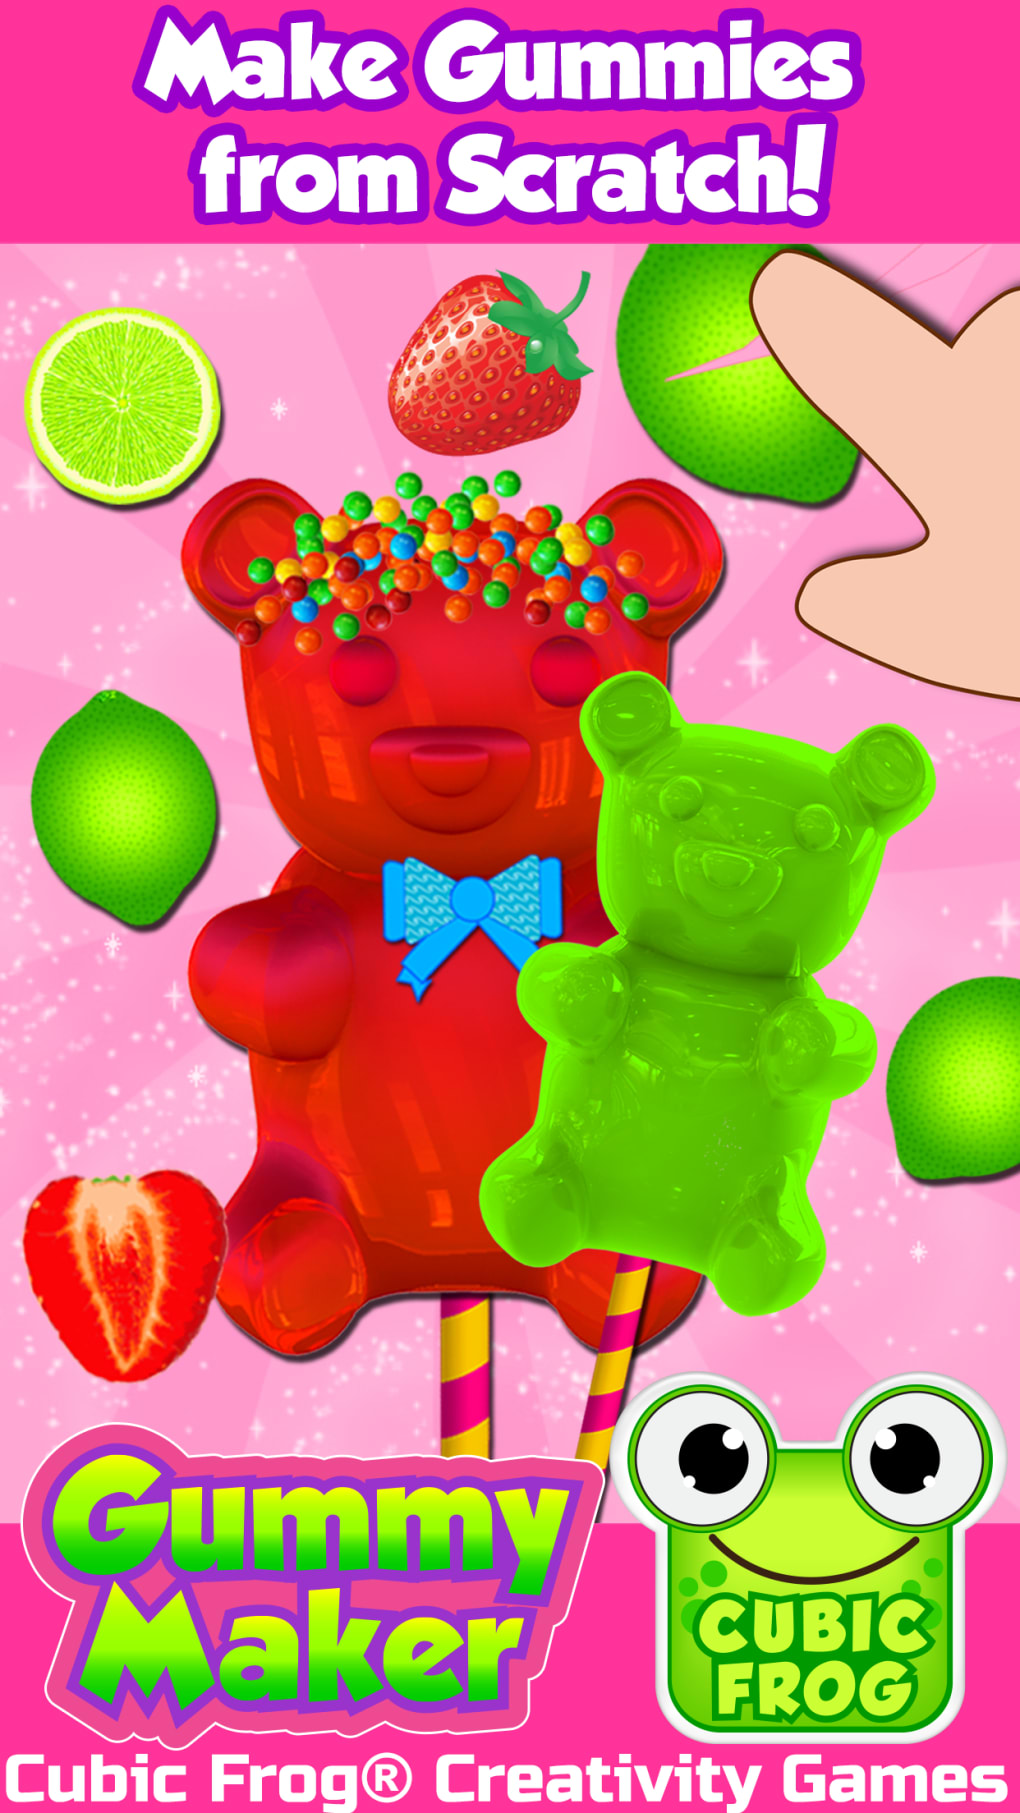 iMake Lollipops - Free Lollipop Maker by Cubic Frog Apps! More